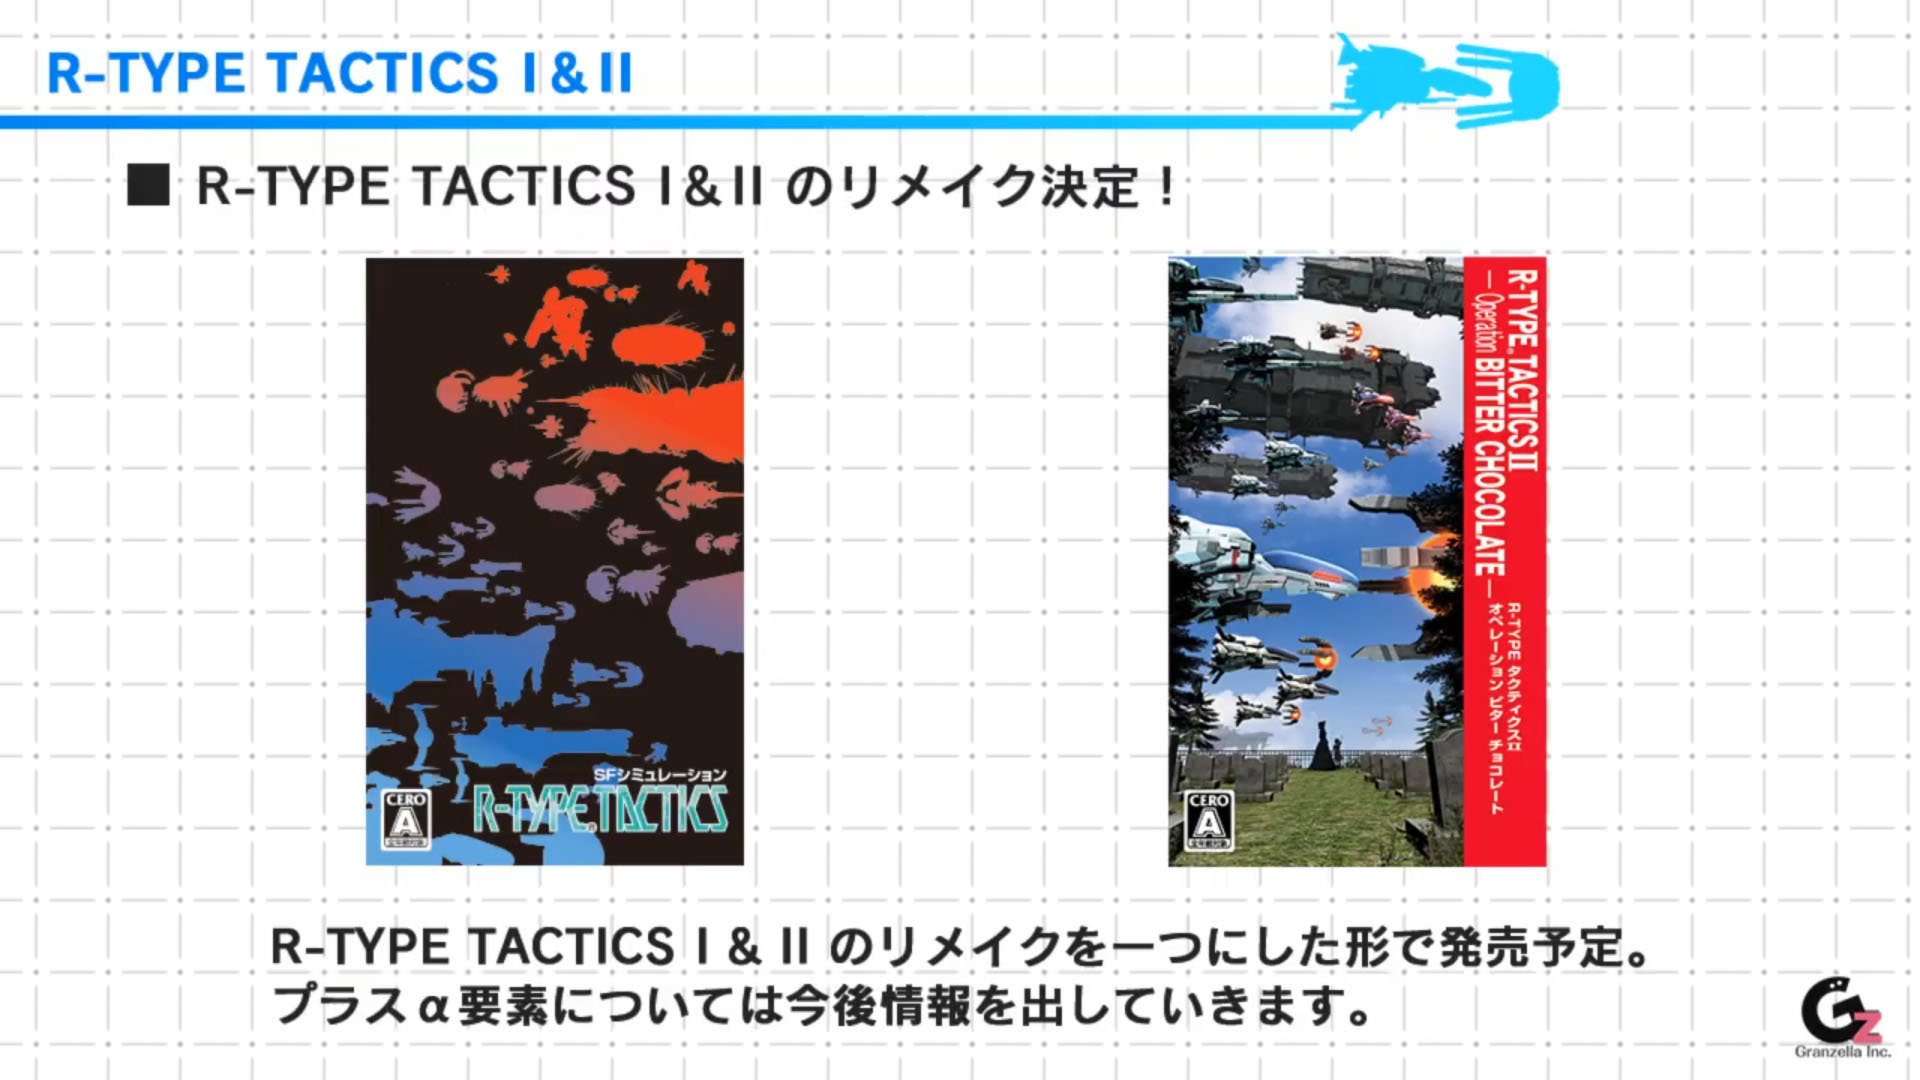 R-Type Tactics I & II remakes announced - Gematsu